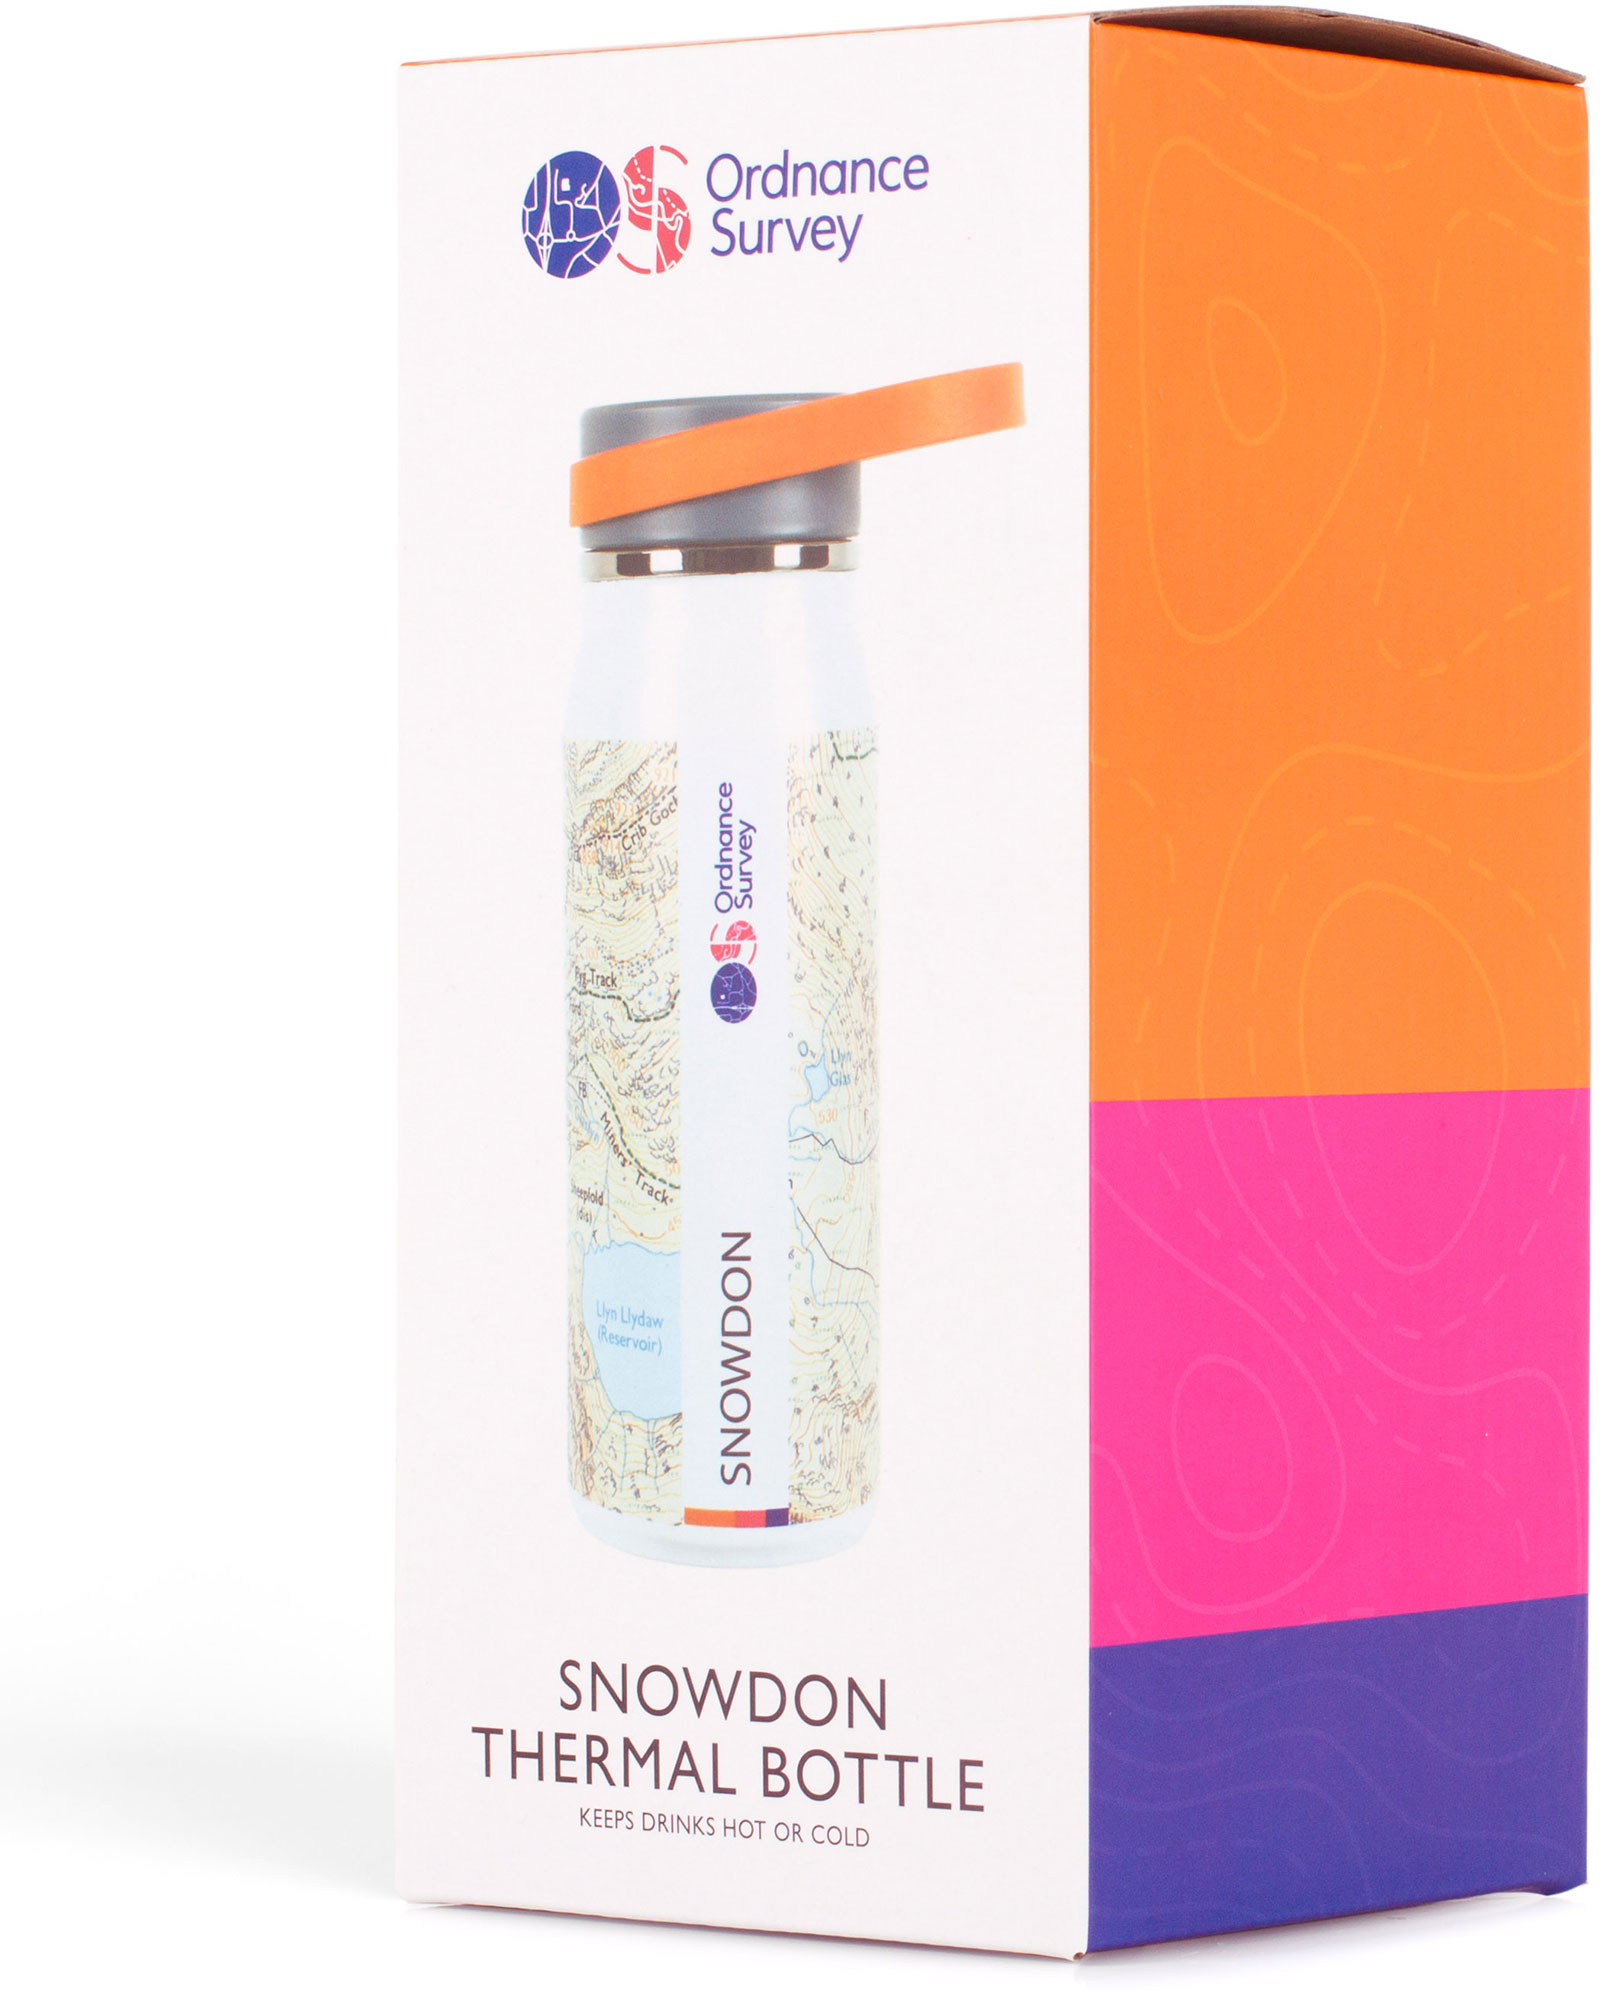 Ordnance Survey Thermal Bottle   Snowdon